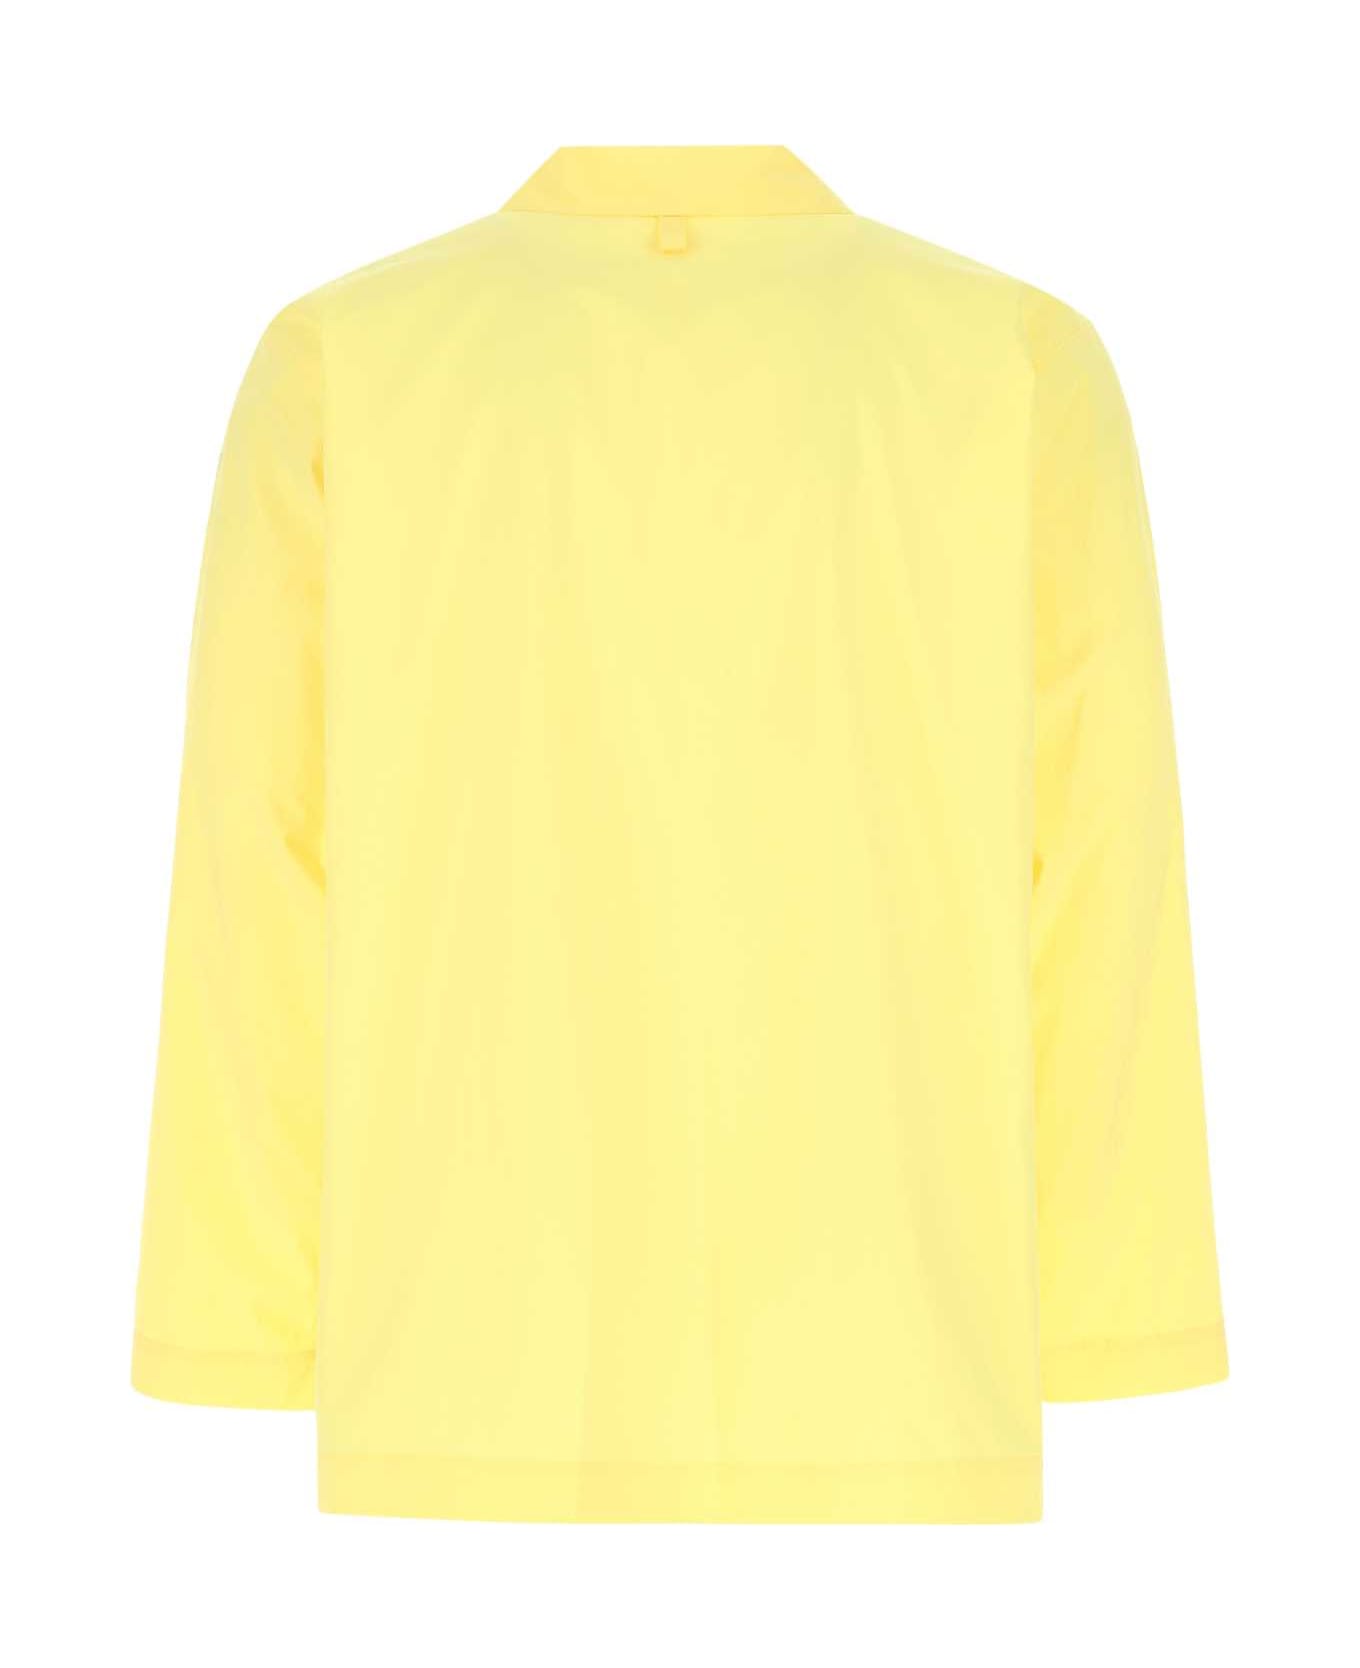 Homme Plissé Issey Miyake Yellow Polyester Shirt - 52